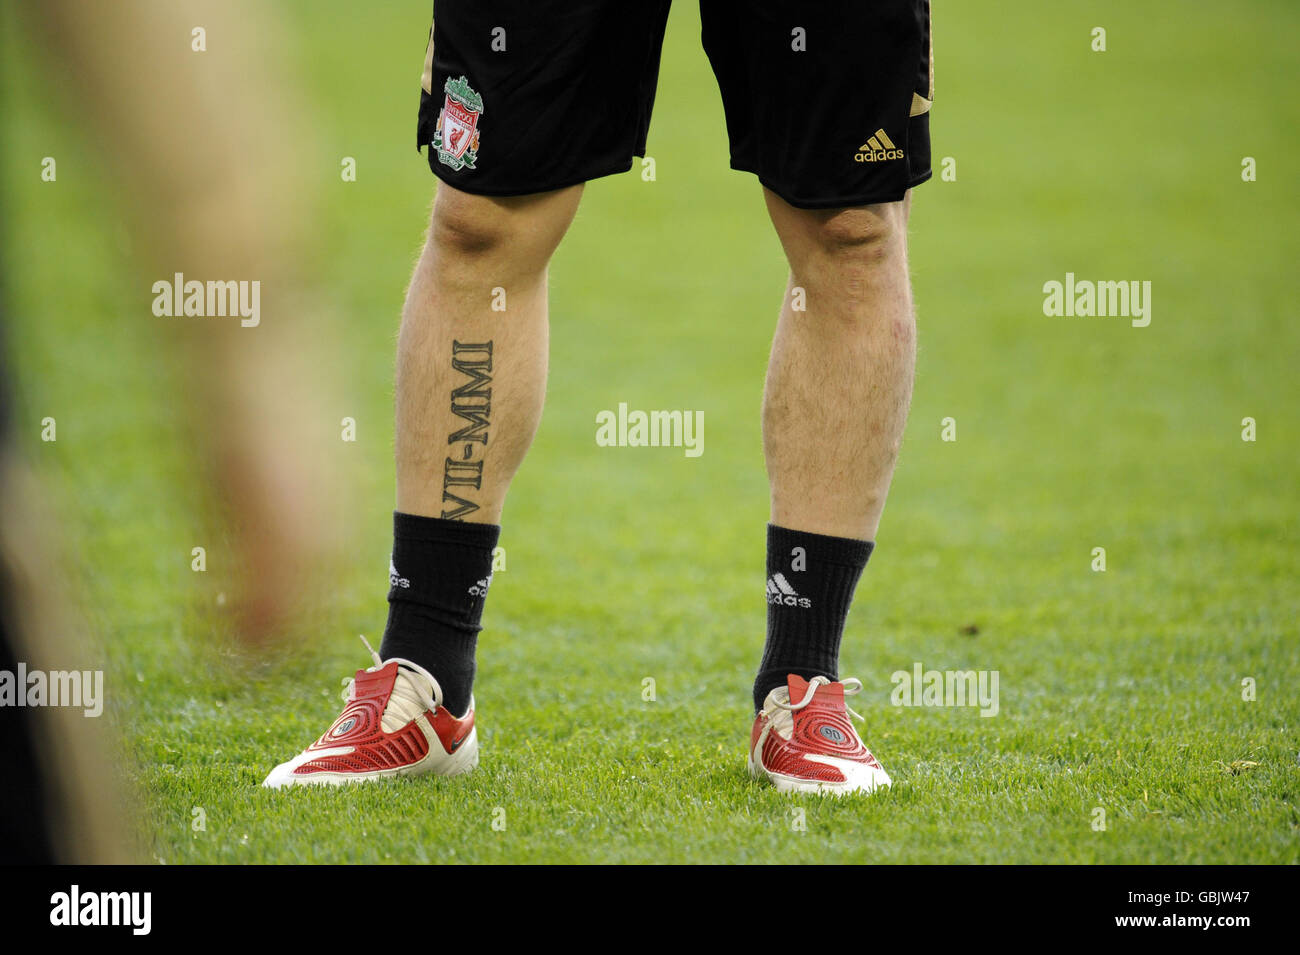 cilindro maestría carta Fútbol liverpool adidas logo calcetines inglaterra mangrs fotografías e  imágenes de alta resolución - Alamy